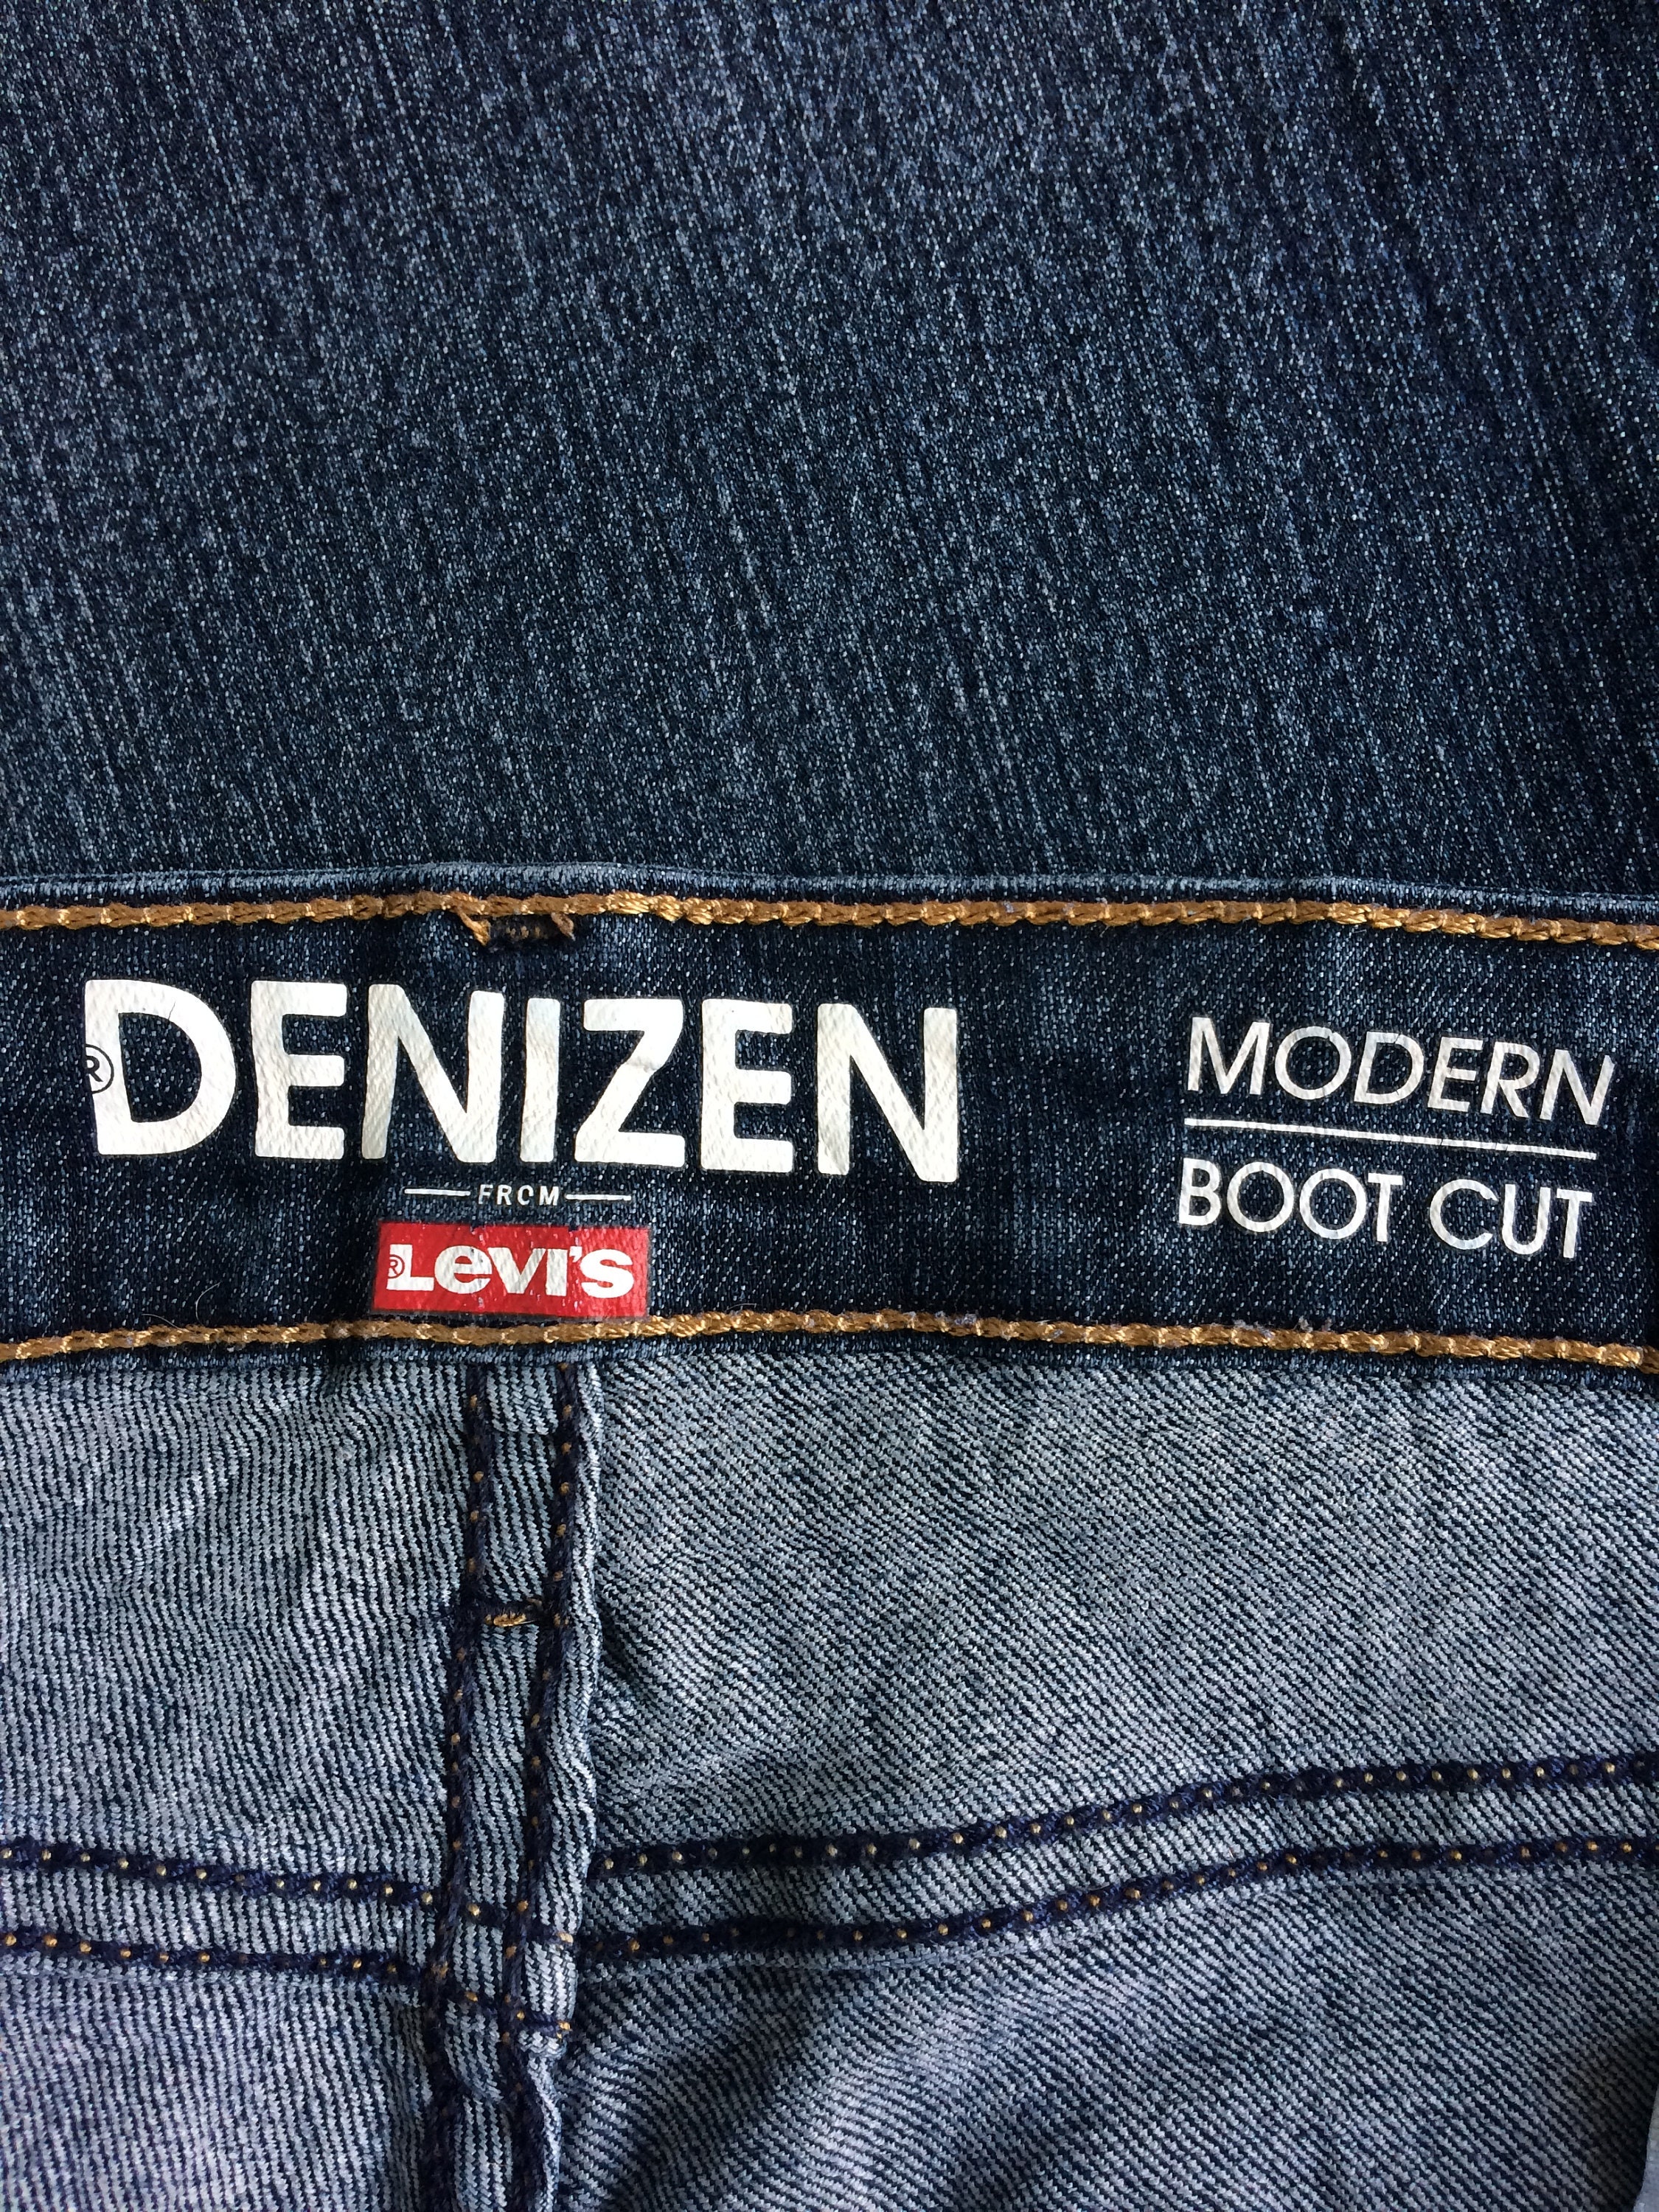 Size 33 Vintage Distressed Denizen Levis Modern Bootcut Jeans - Etsy